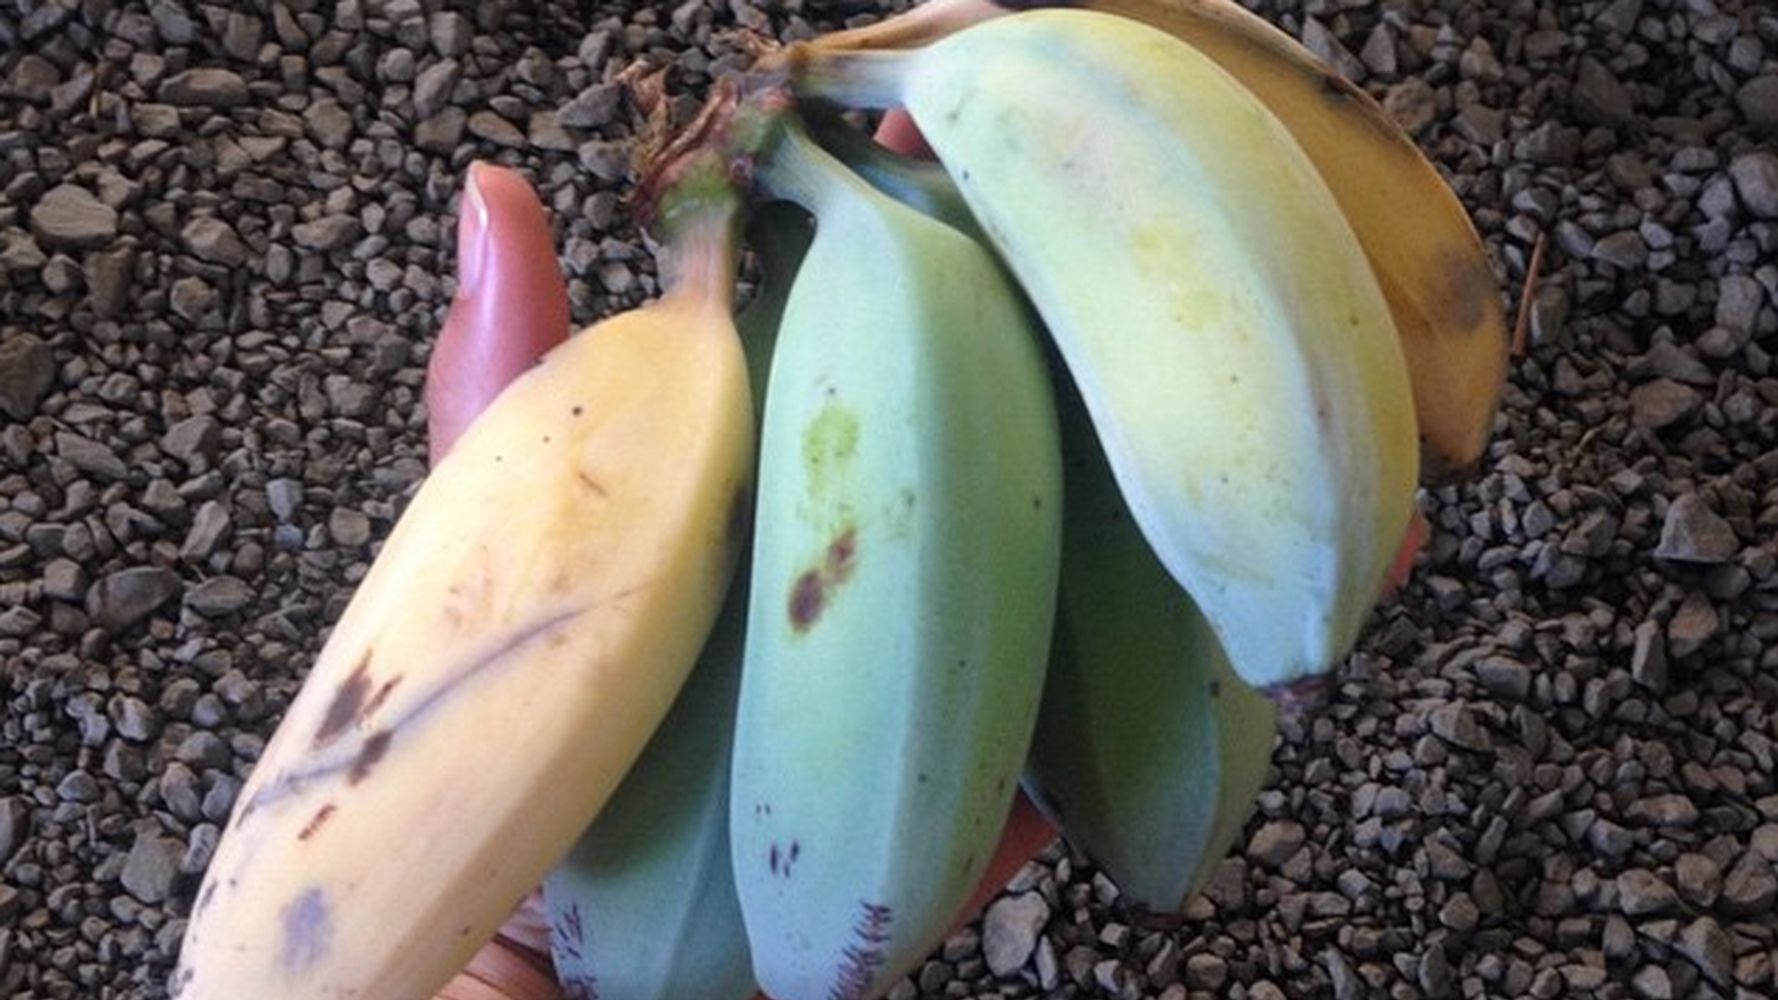 Apparently Everyone Is Planting Blue Java Bananas Because They Taste Like  Ice Cream